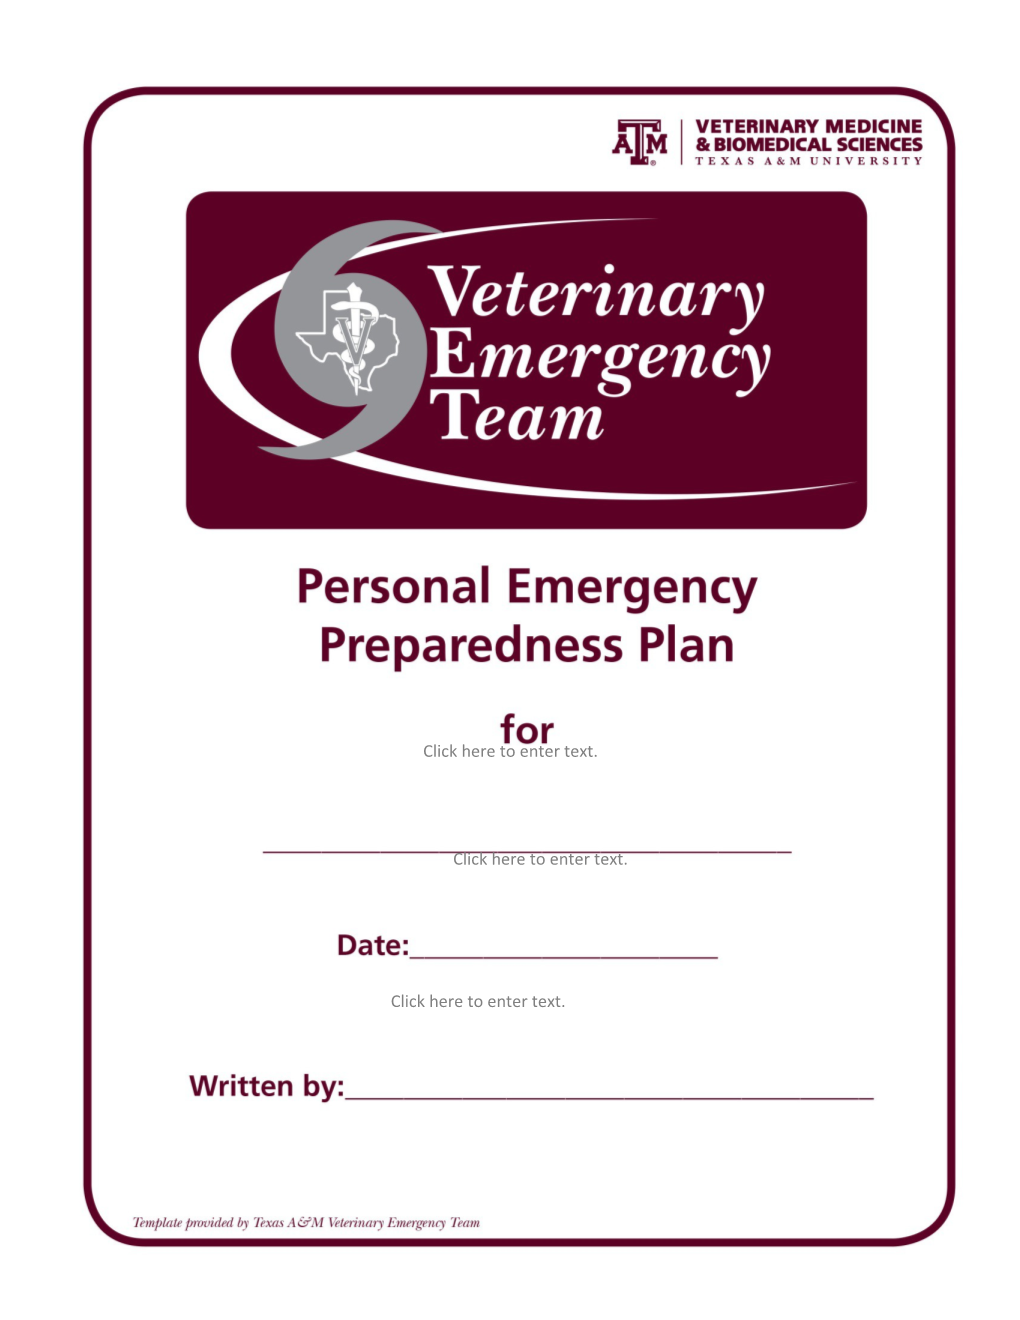 Personal Emergency Preparedness Plan